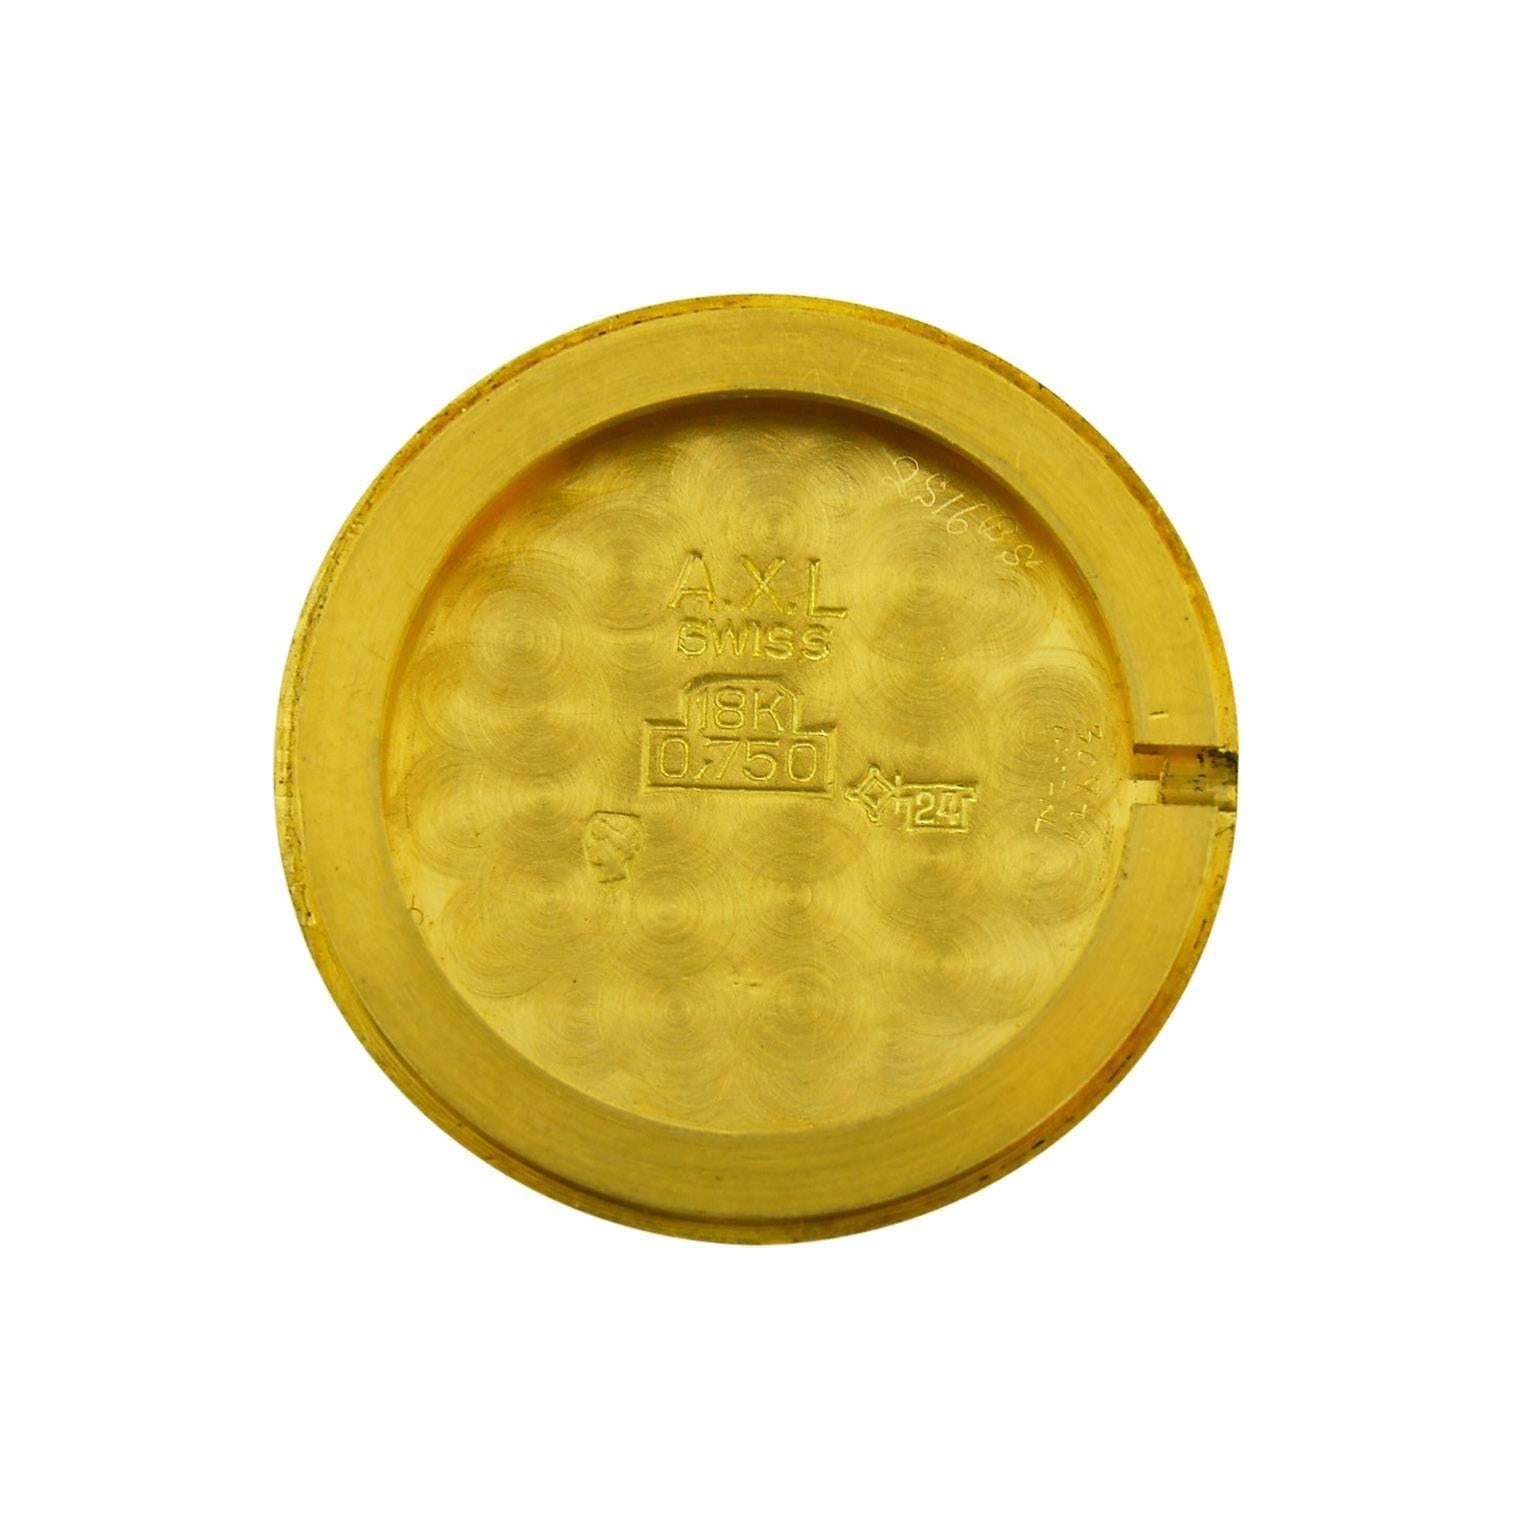 Cartier by Bueche Girod Yellow Gold Enamel Manual Wind Watch, circa 1970s For Sale 10